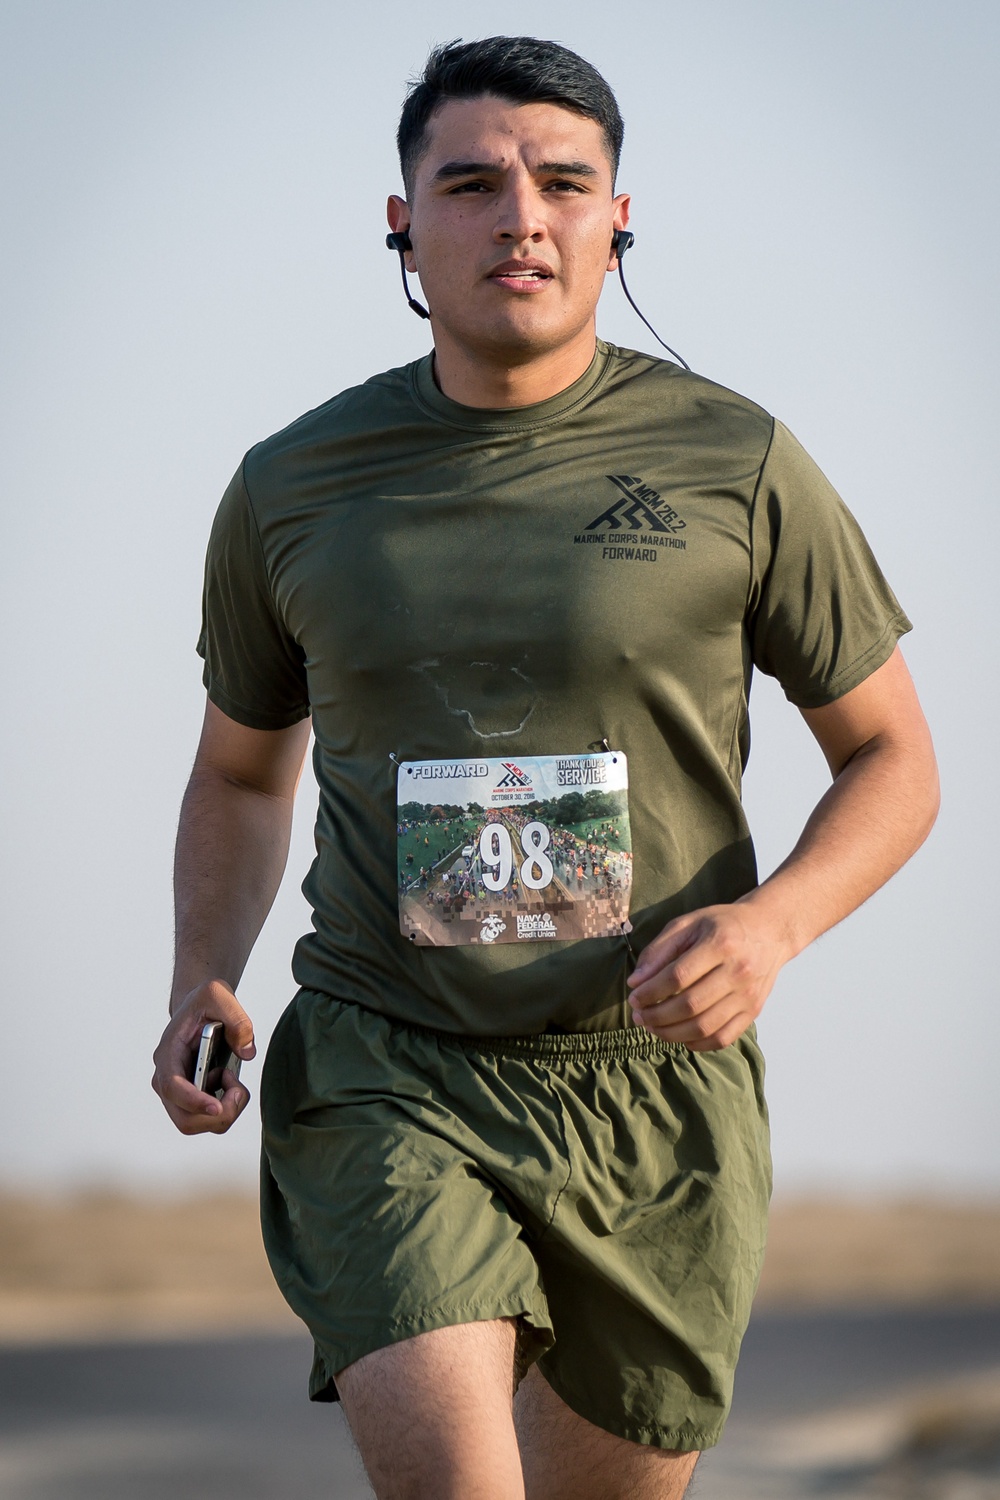 SPMAGTF-CR-CC hosts Marine Corps Marathon Forward